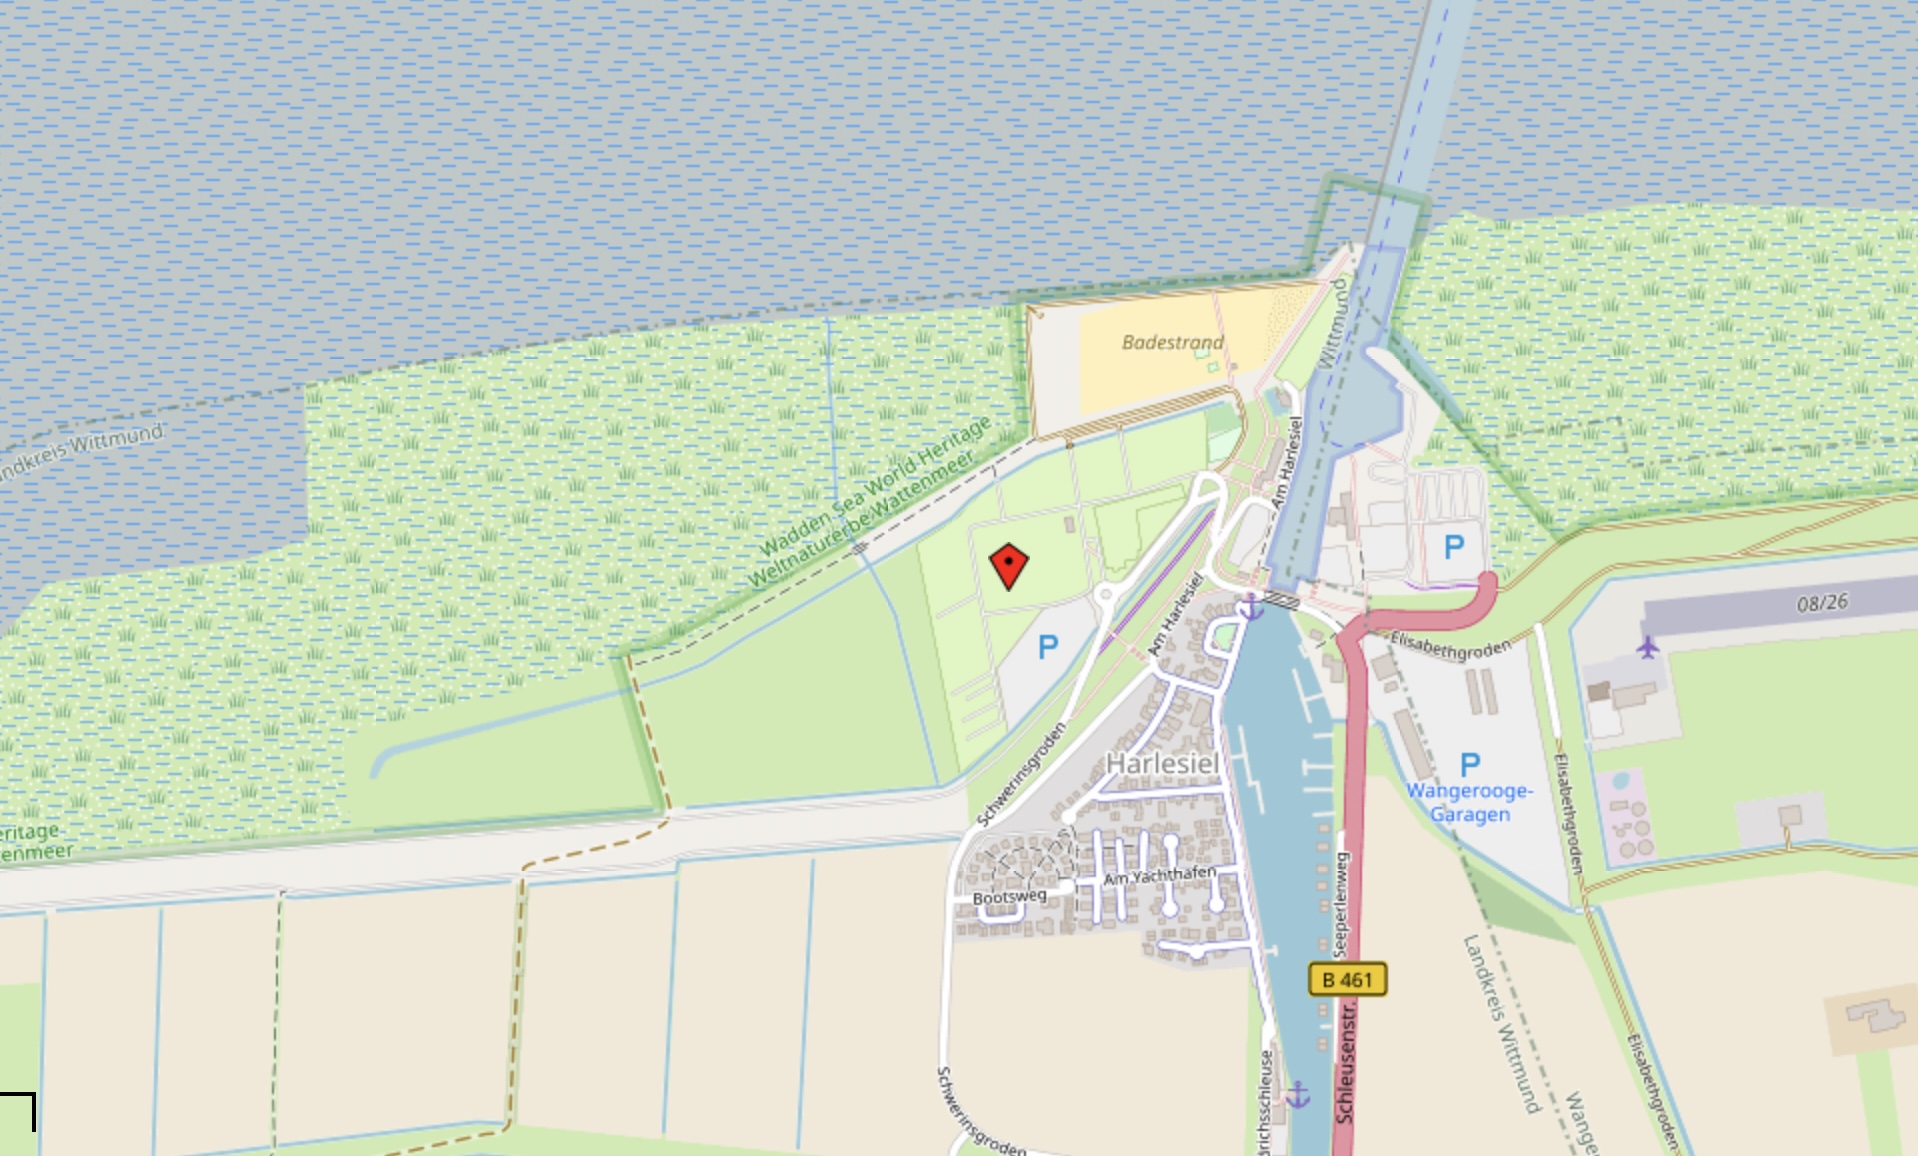 Karte Campingplatz Harlesiel